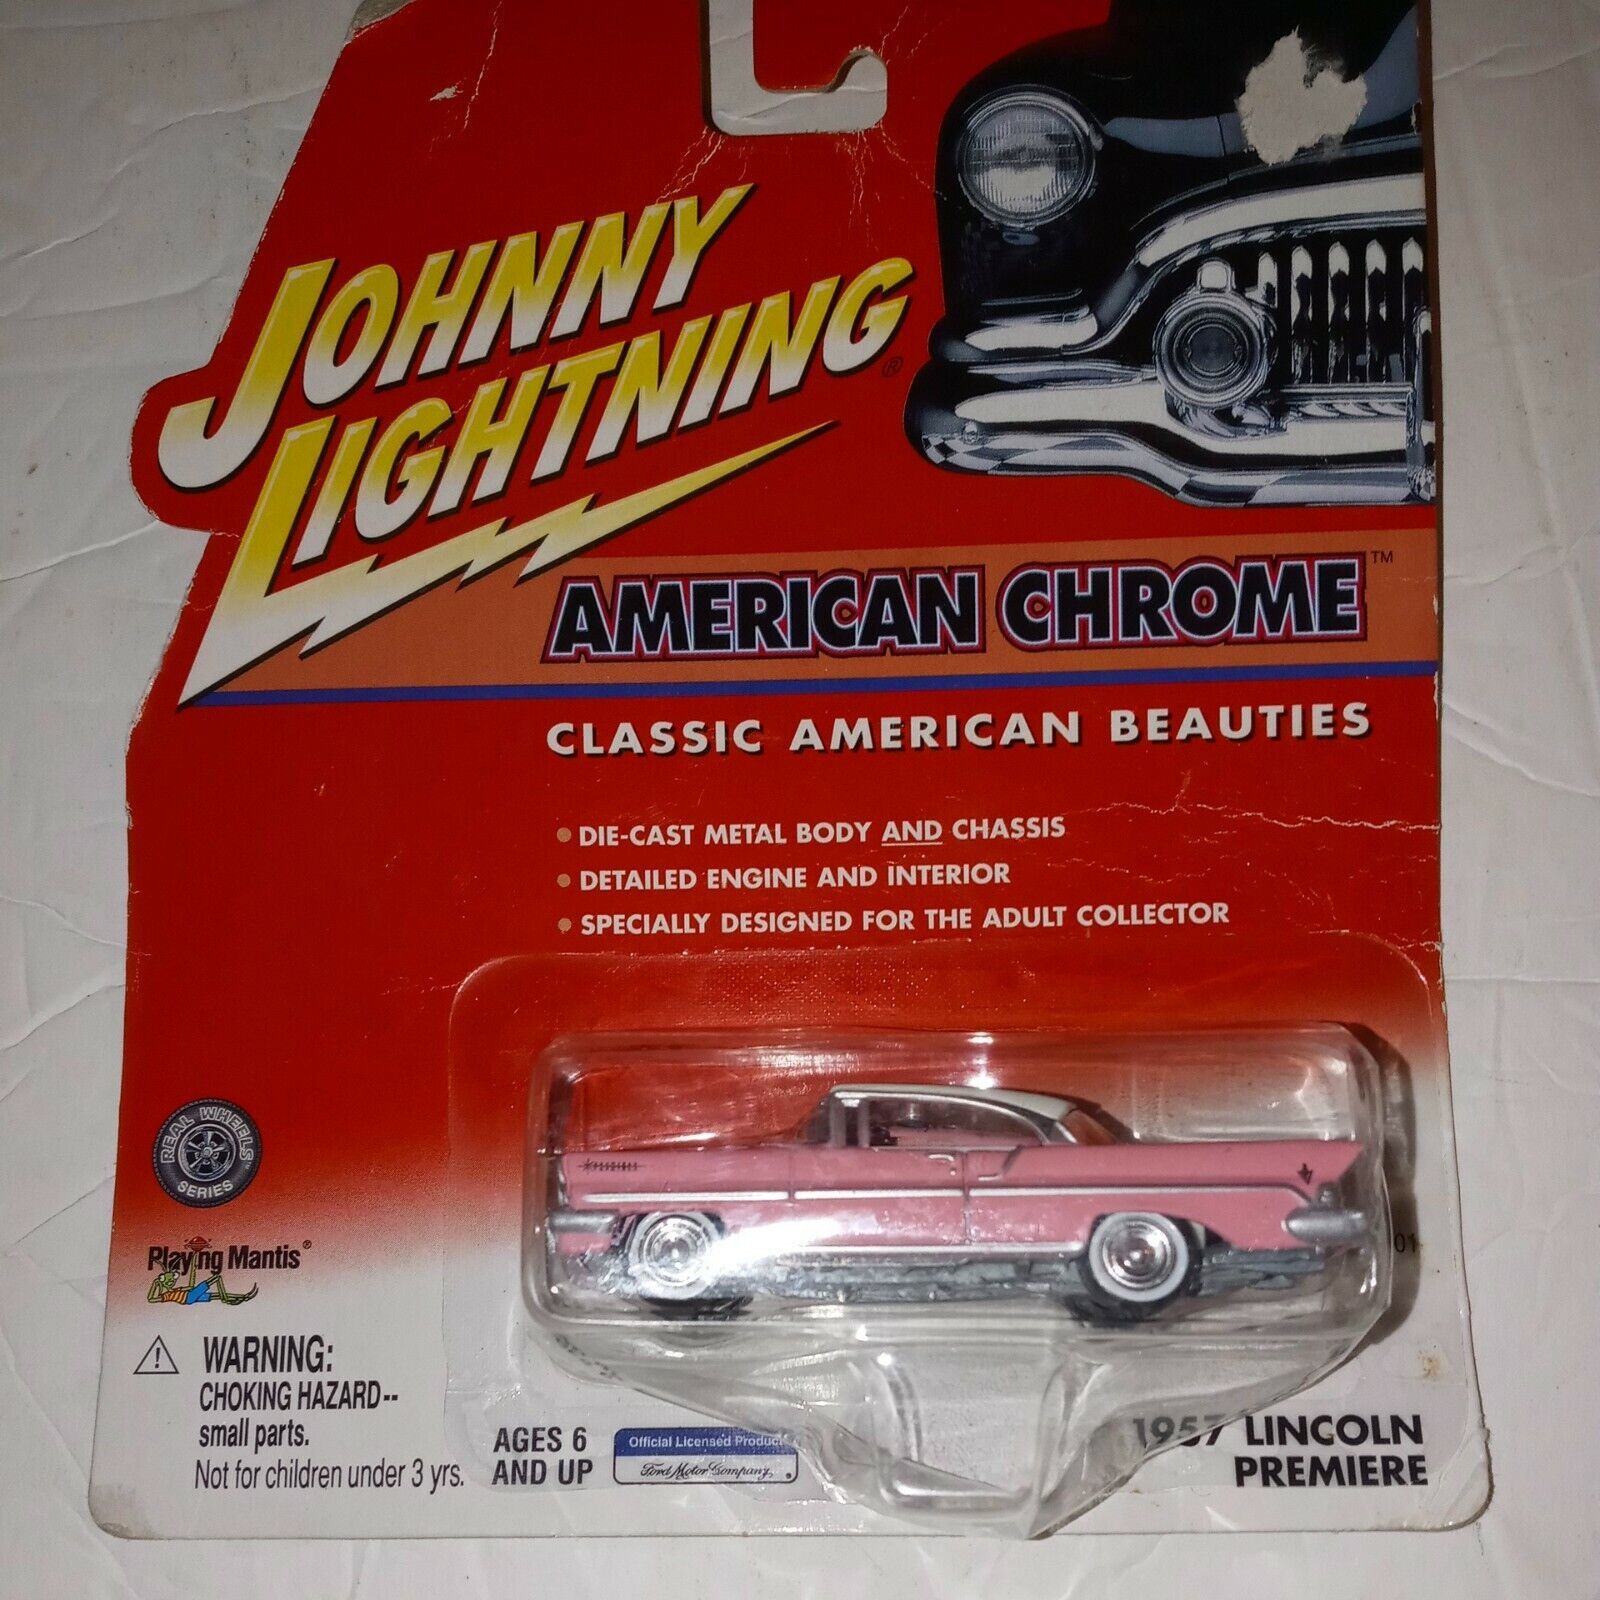 Primary image for Johnny Lightning American Chrome 1957 Lincoln Premiere - Pink WHITE LIGHTNING